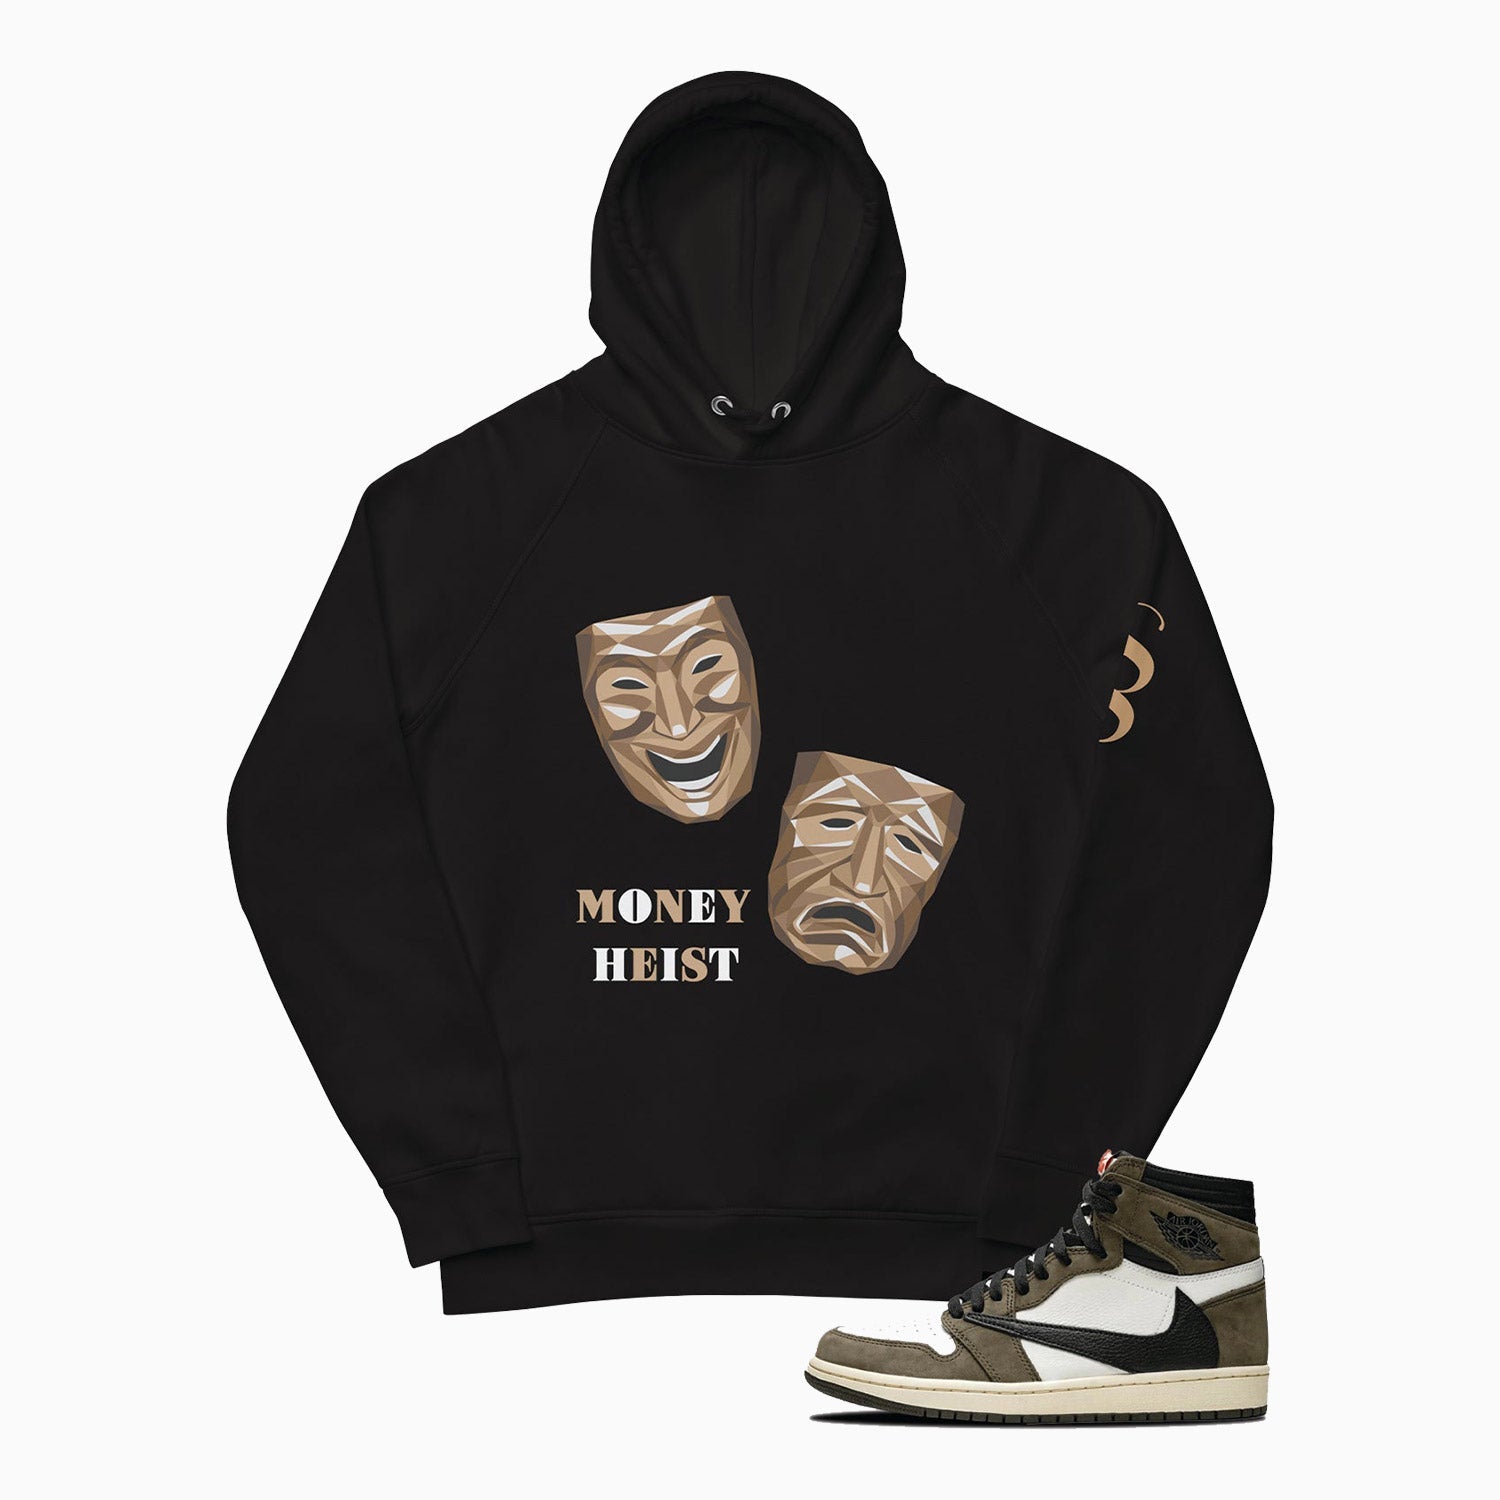 money-heist-design-printed-pull-over-hoodie-for-men-sh108-010